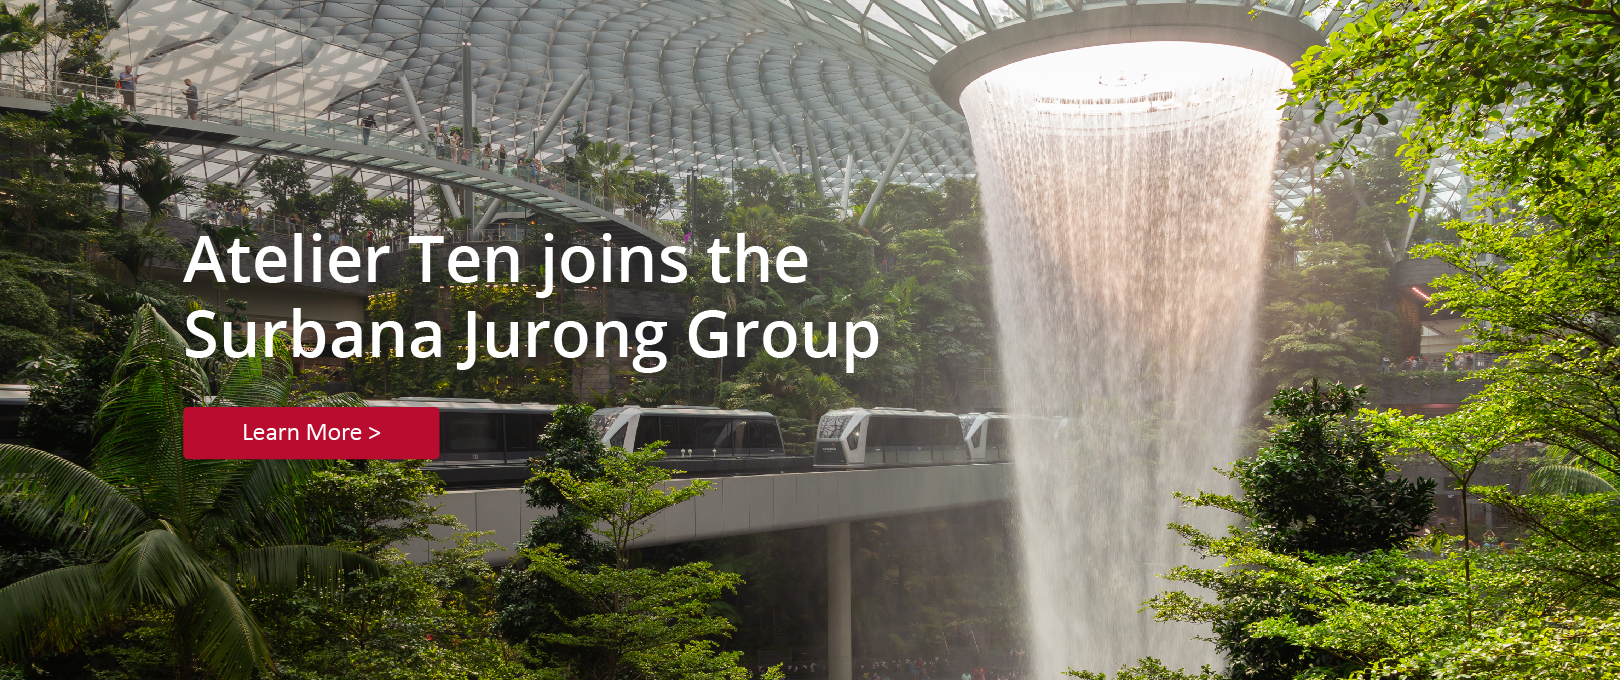 https://surbanajurong.com/resources/news/environmental-design-consultancy-atelier-ten-joins-the-surbana-jurong-group/